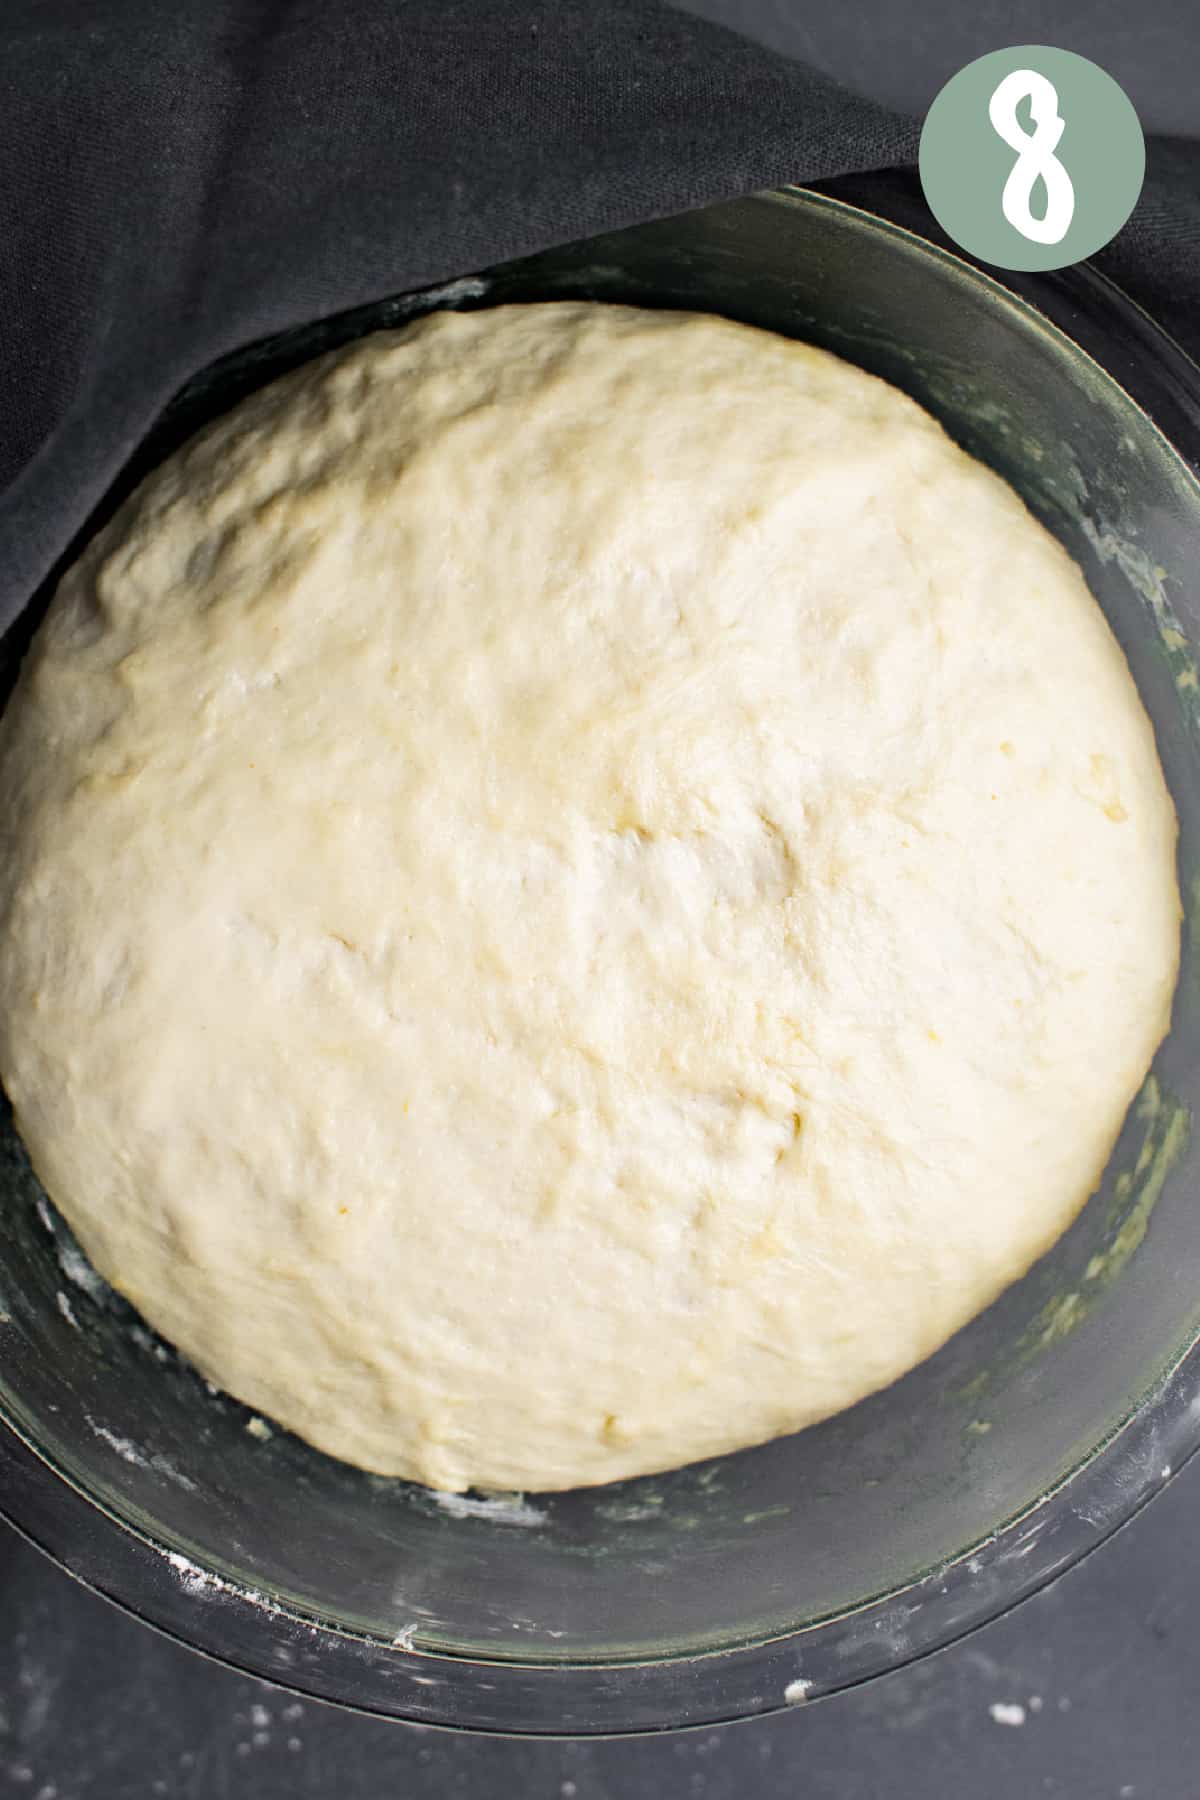 Risen dough ball in a glass bowl.